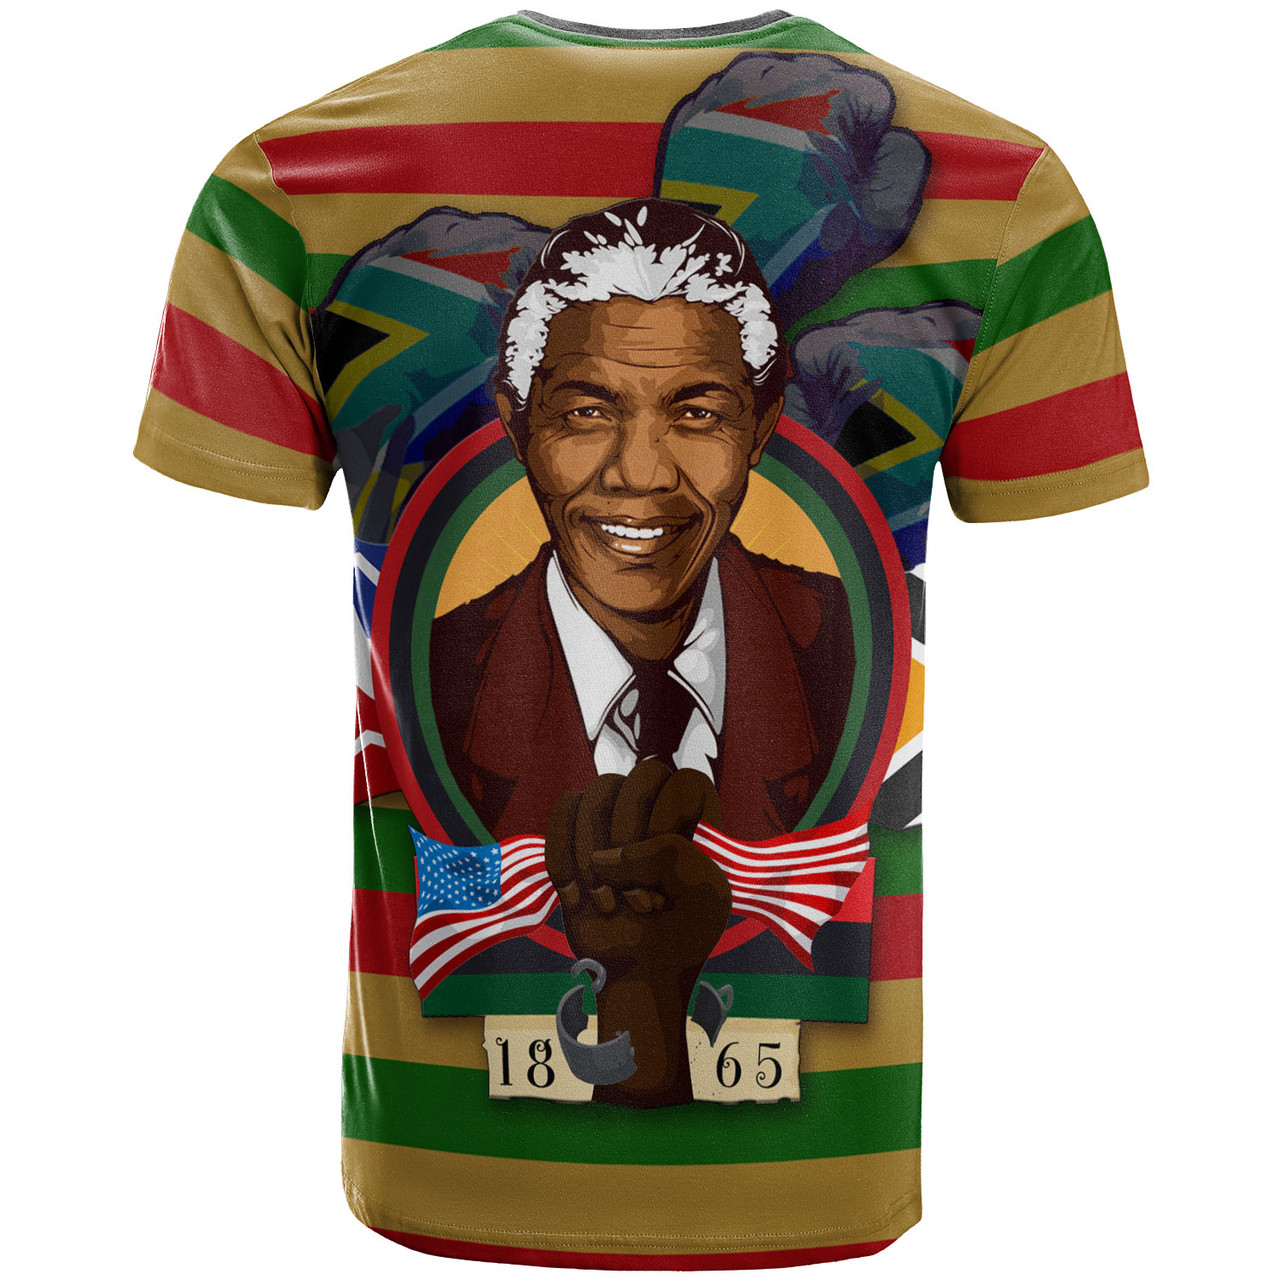 Africa T-Shirt - Nelson Mandela Symbol Of Freedom And Equality T-Shirt Desert Fashion 2